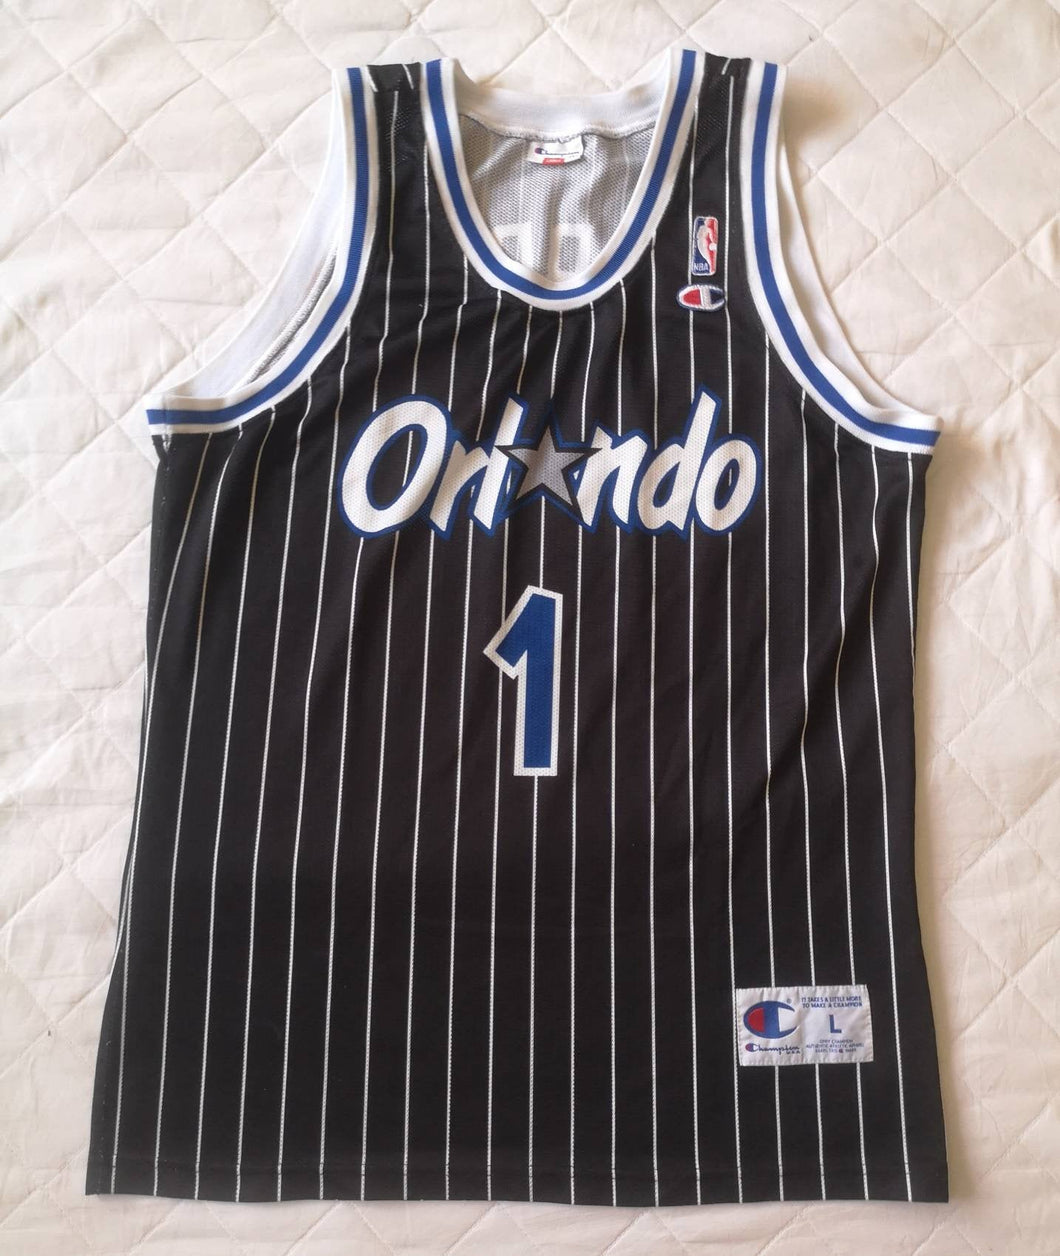 Authentic jersey Hardaway Orlando Magic 1990's Champion Vintage